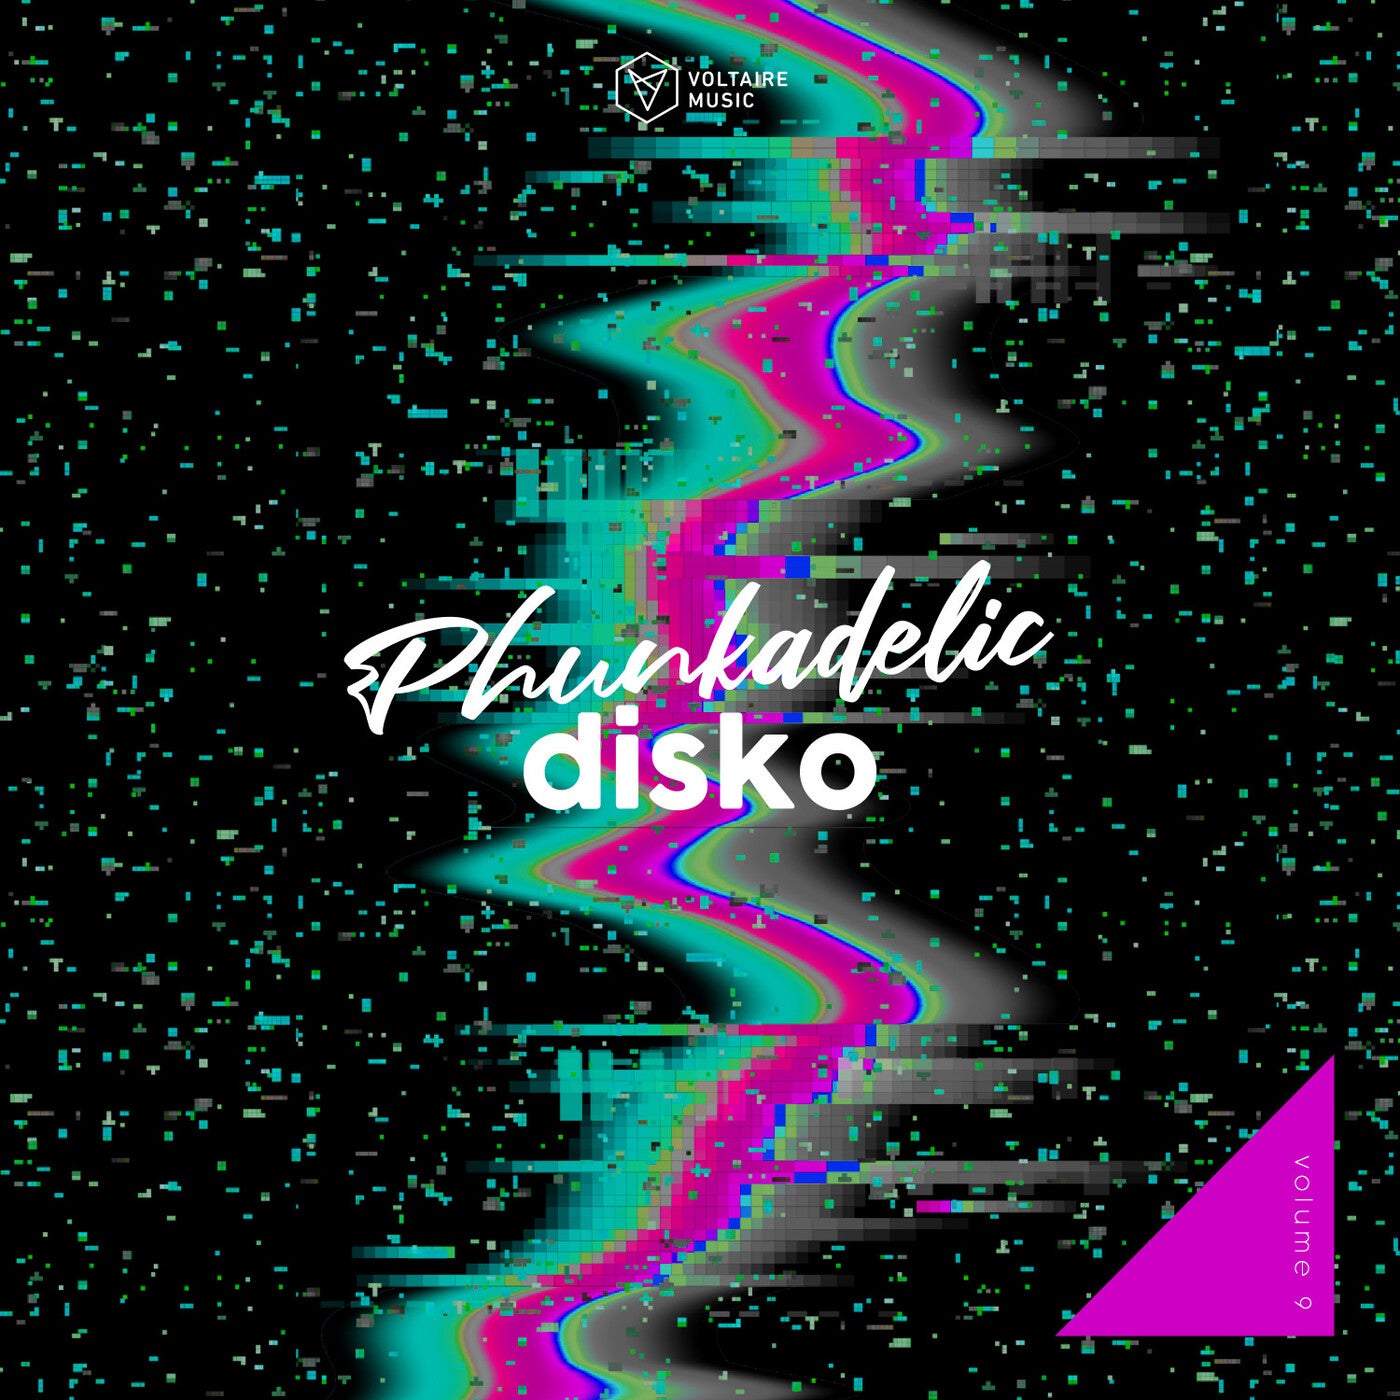 Phunkadelic Disko Vol. 9